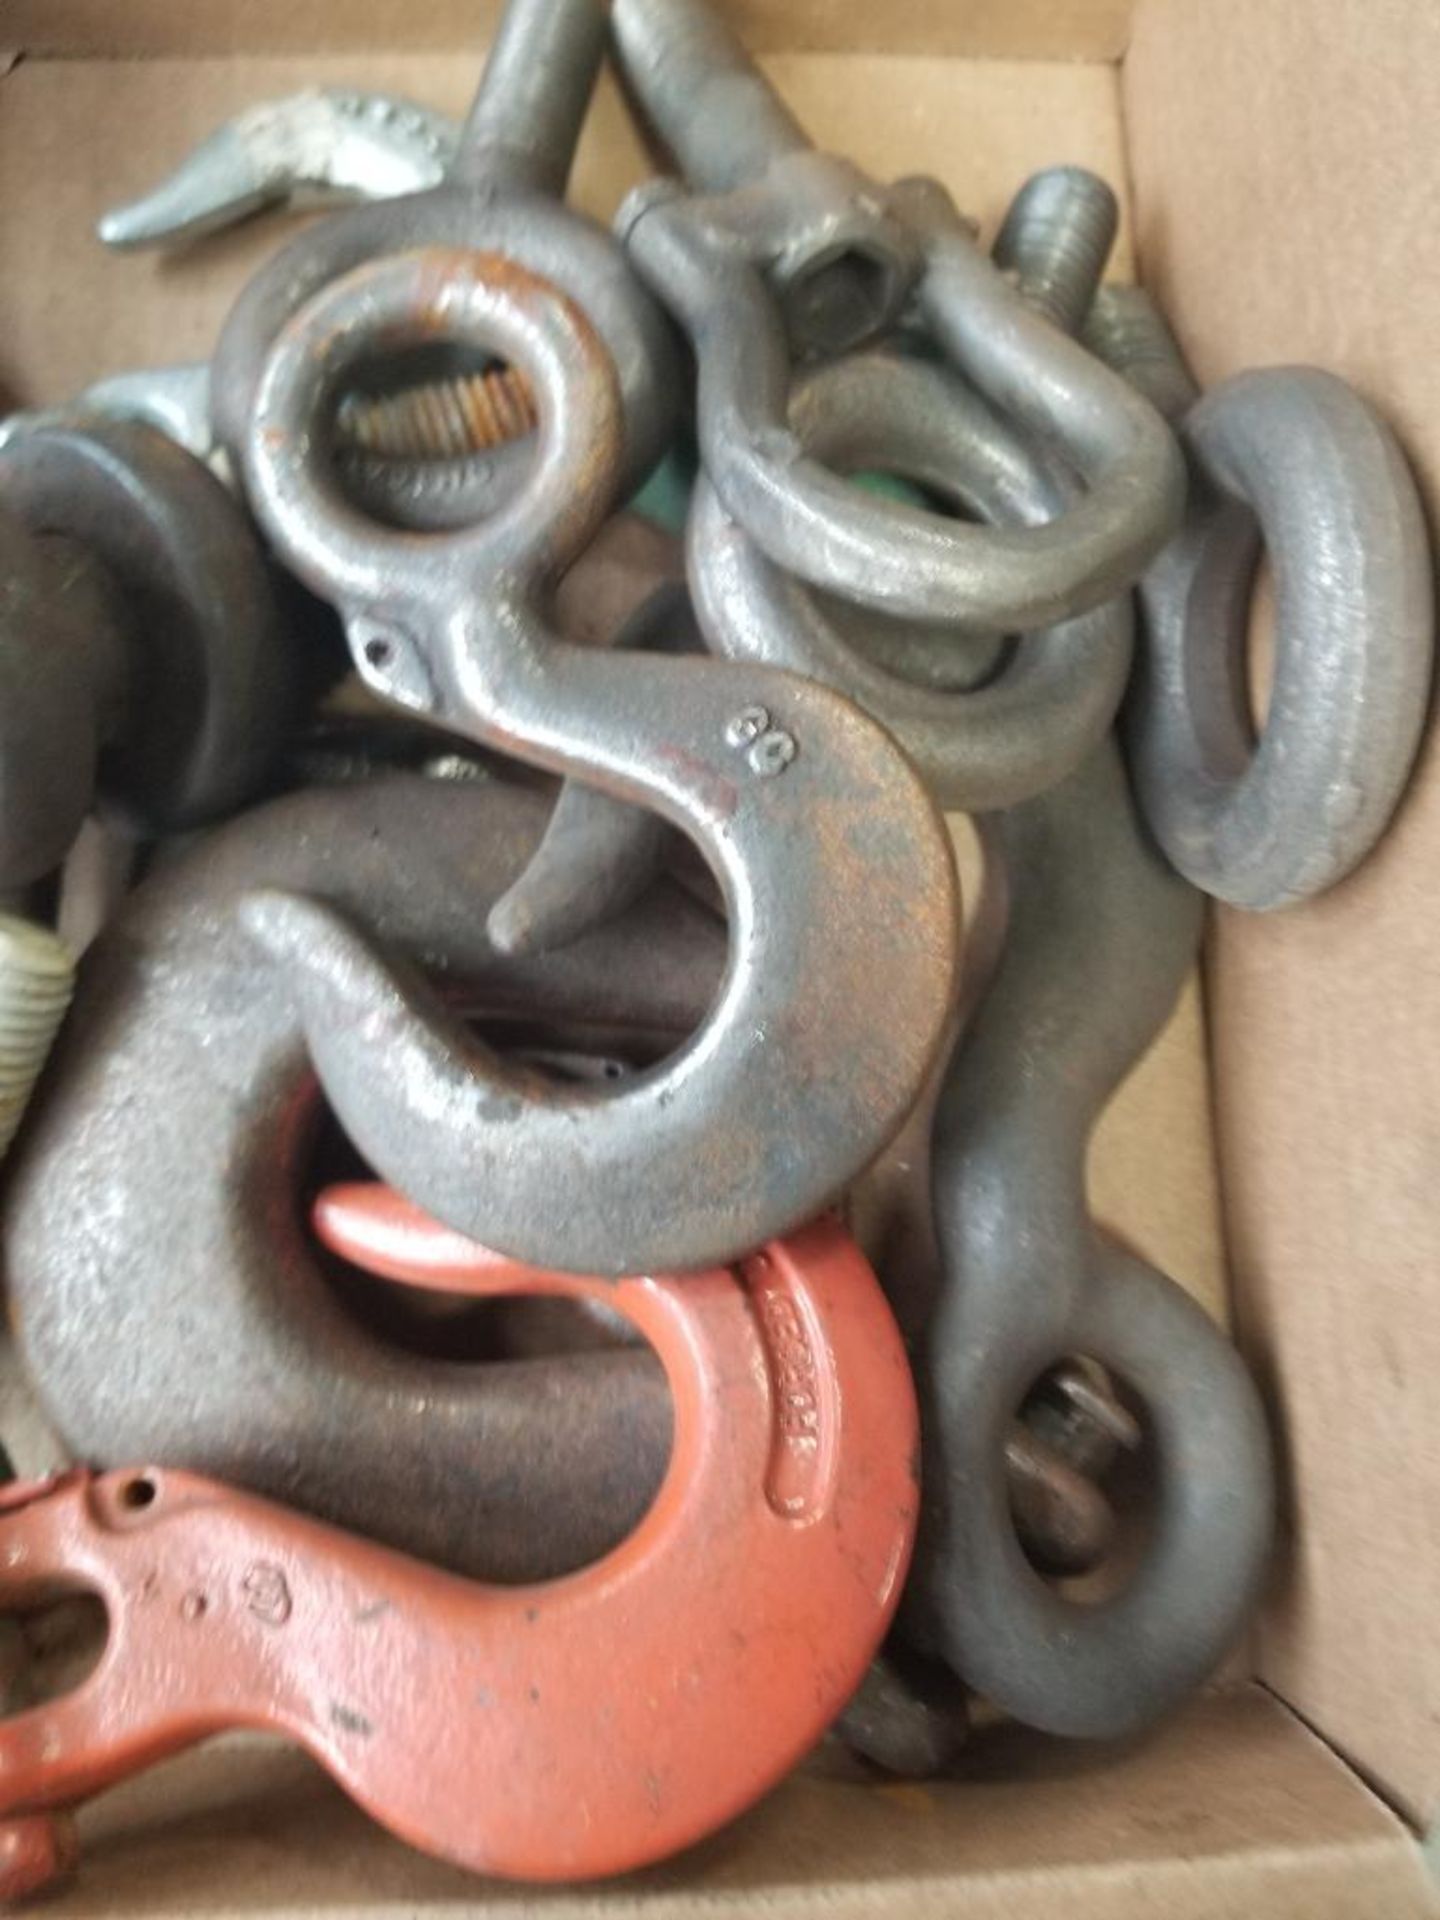 Assorted chain hooks.